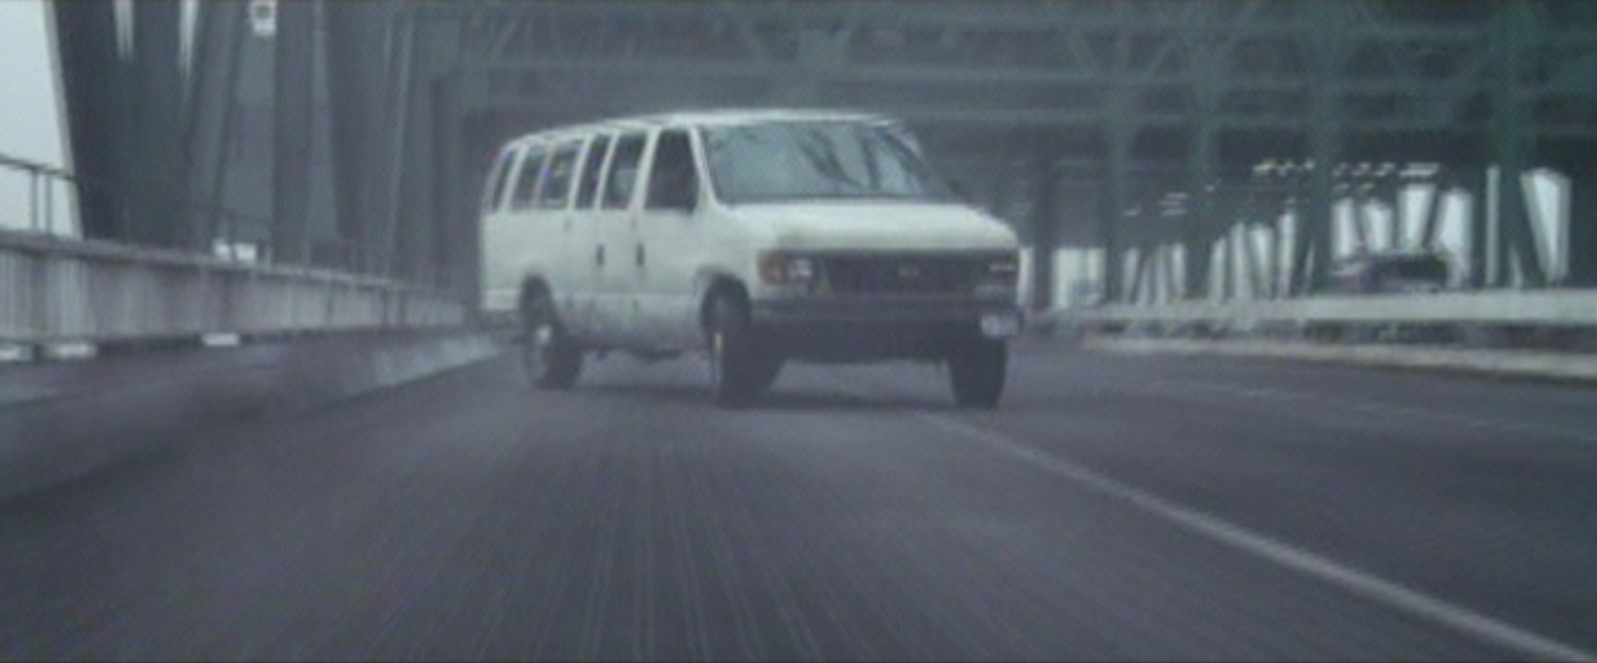 'Inception' White Van Driver